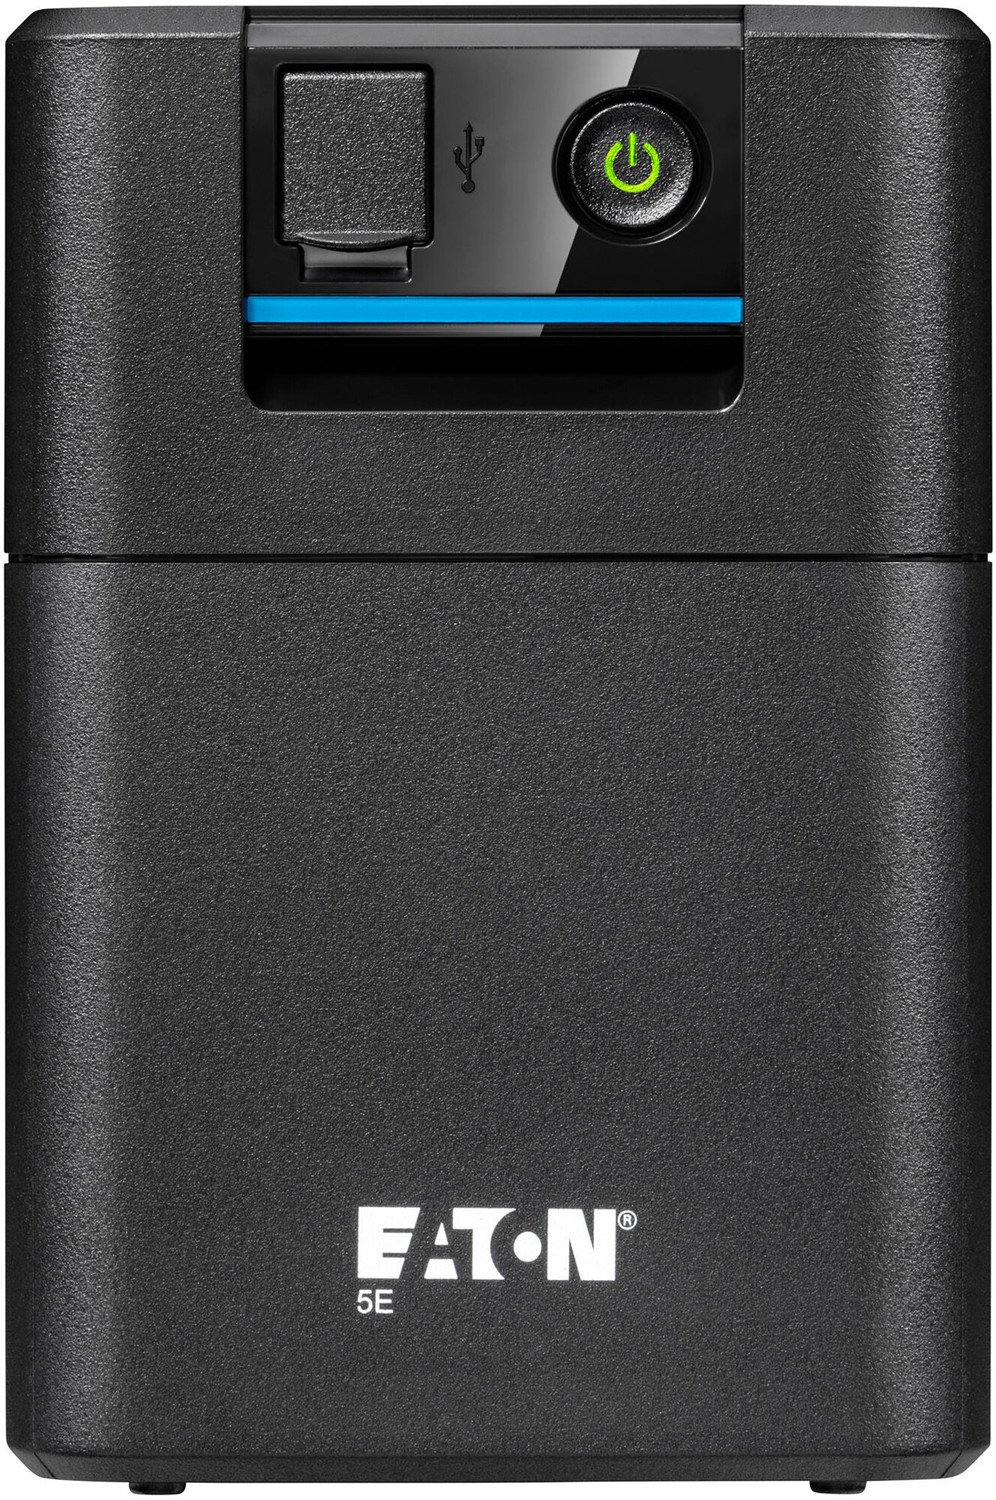 Eaton 5E 700 USB FR G2 - 5E700UF